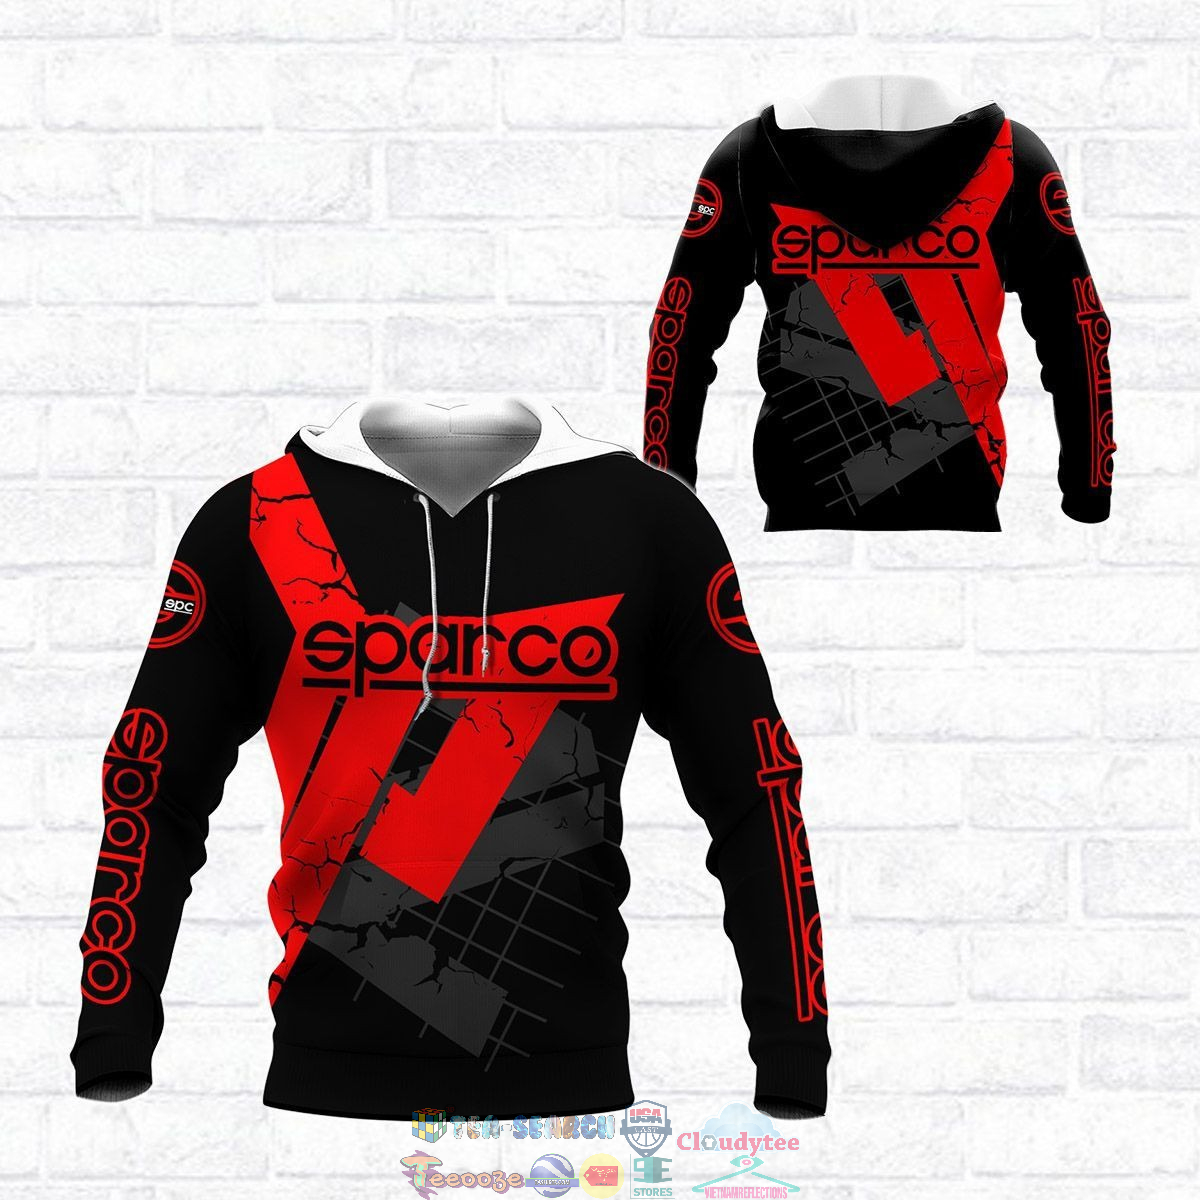 JoLa6MgD-TH080822-20xxxSparco-ver-25-3D-hoodie-and-t-shirt3.jpg